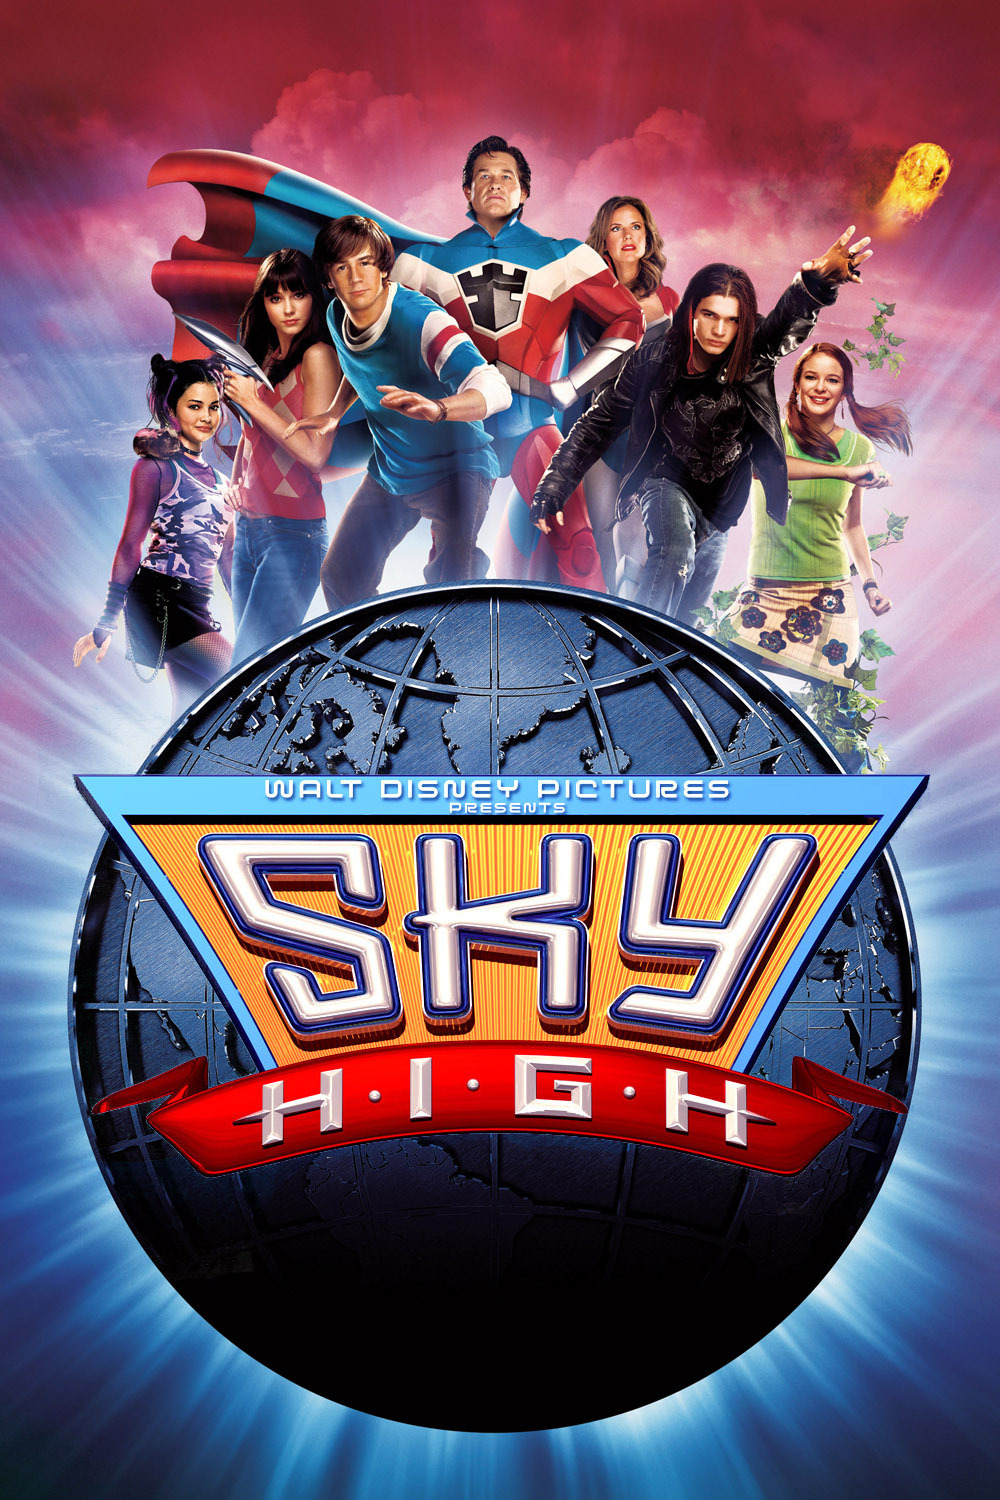 Sky High (2005) - watch full hd streaming movie online free